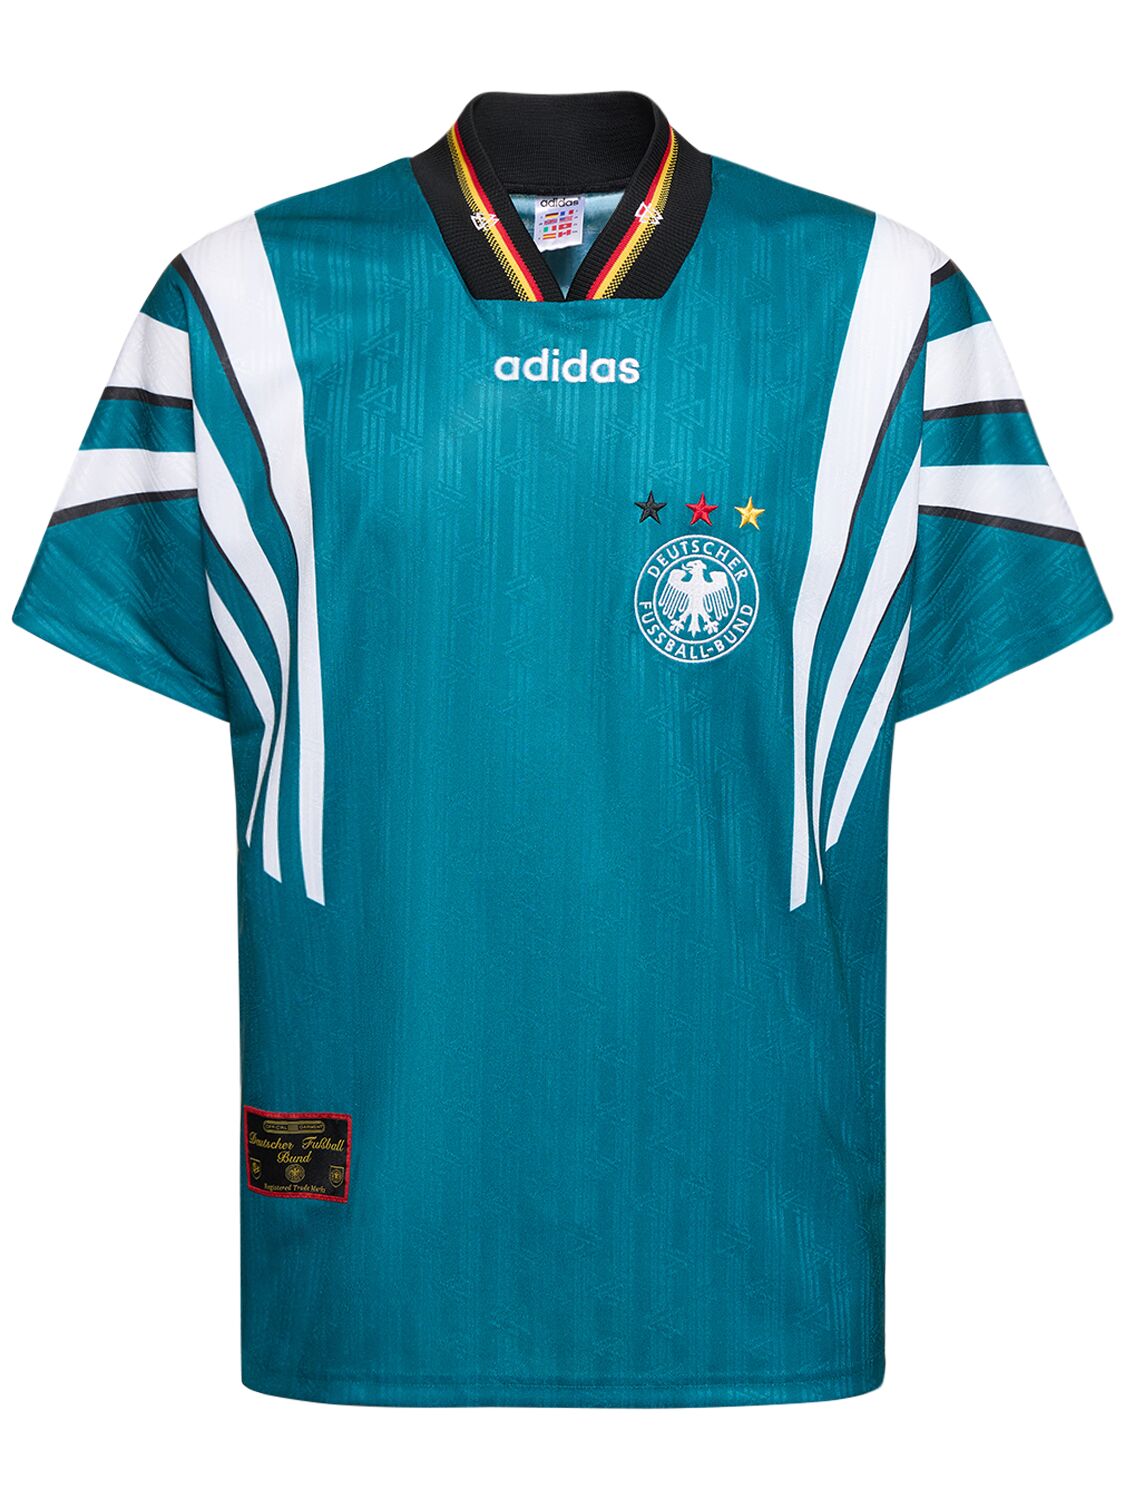 Adidas Originals Germany 96 T恤 In Blue